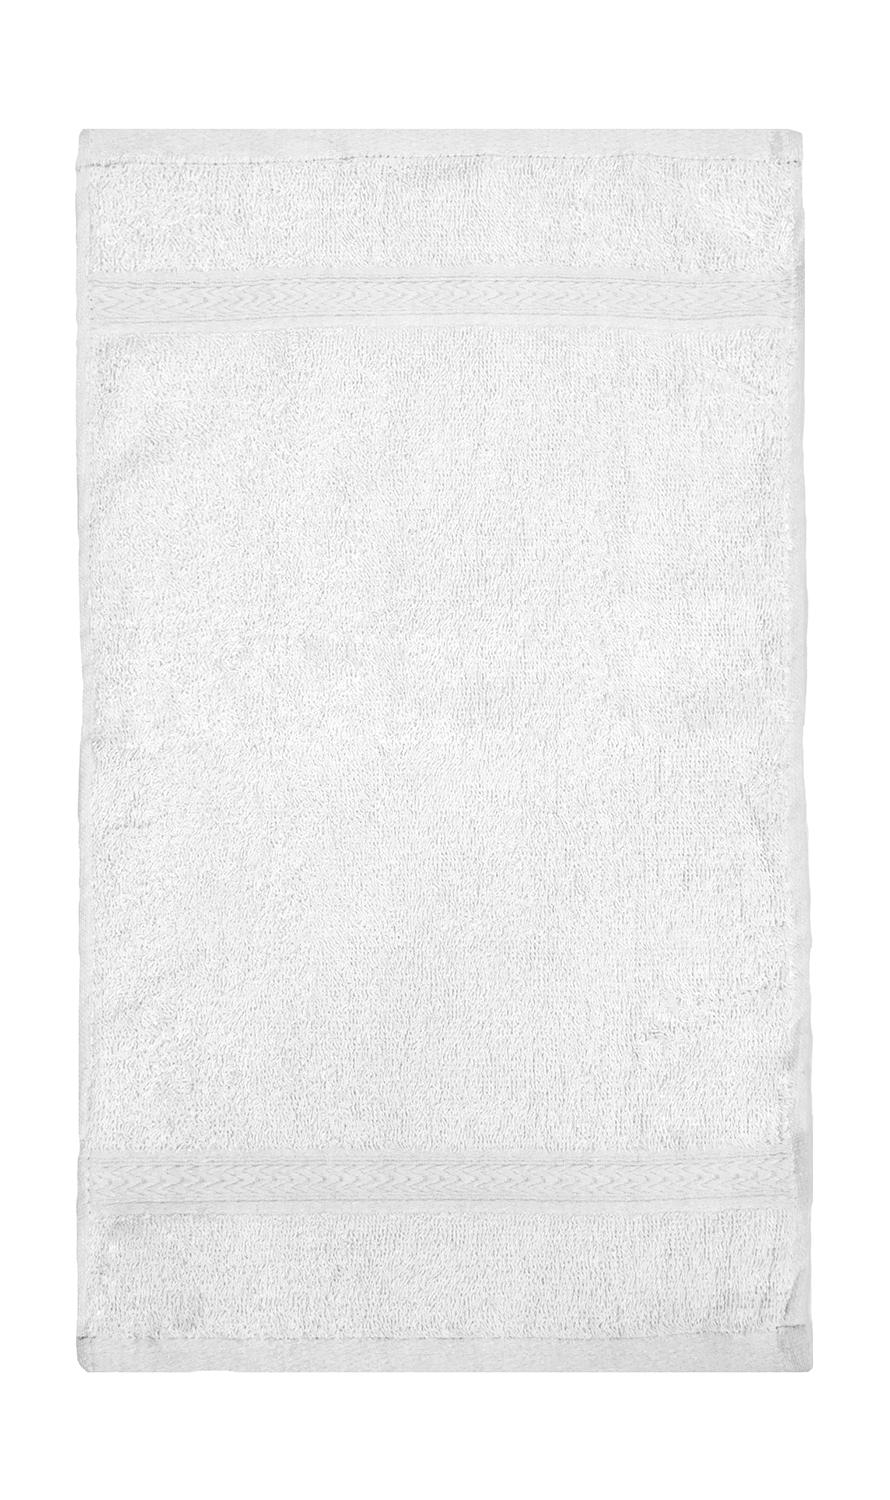  Rhine Guest Towel 30x50 cm in Farbe White